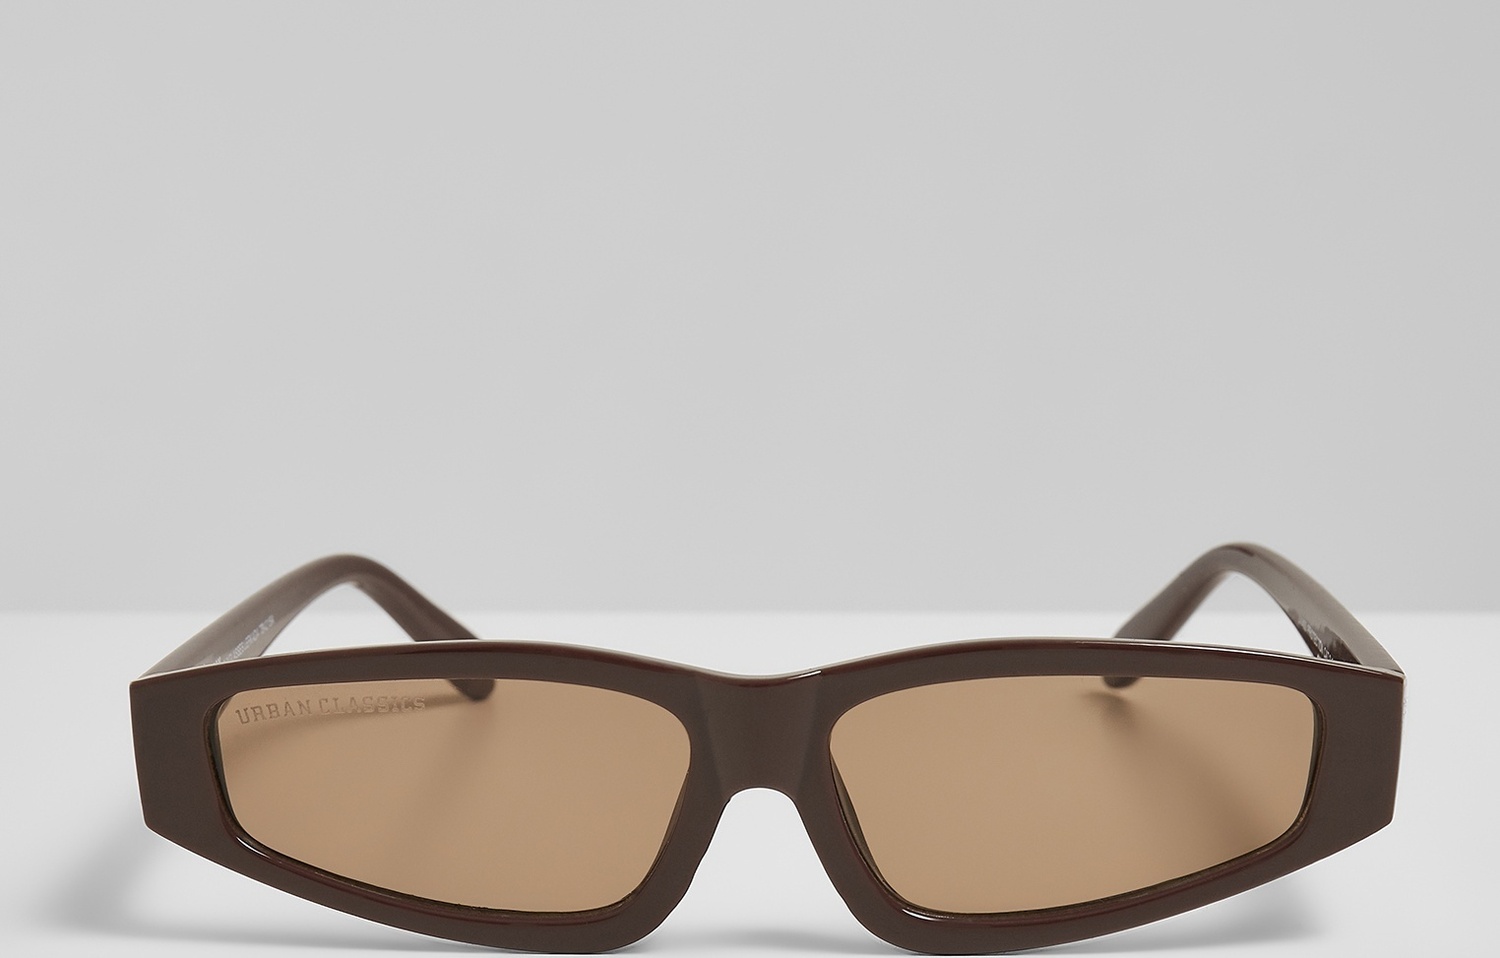 2-Pack | Urban | Classics Lifestyle Lefkada Herren Sonnenbrillen Sunglasses Sonnenbrille Brown/Brown+Offwhite/ Pink |